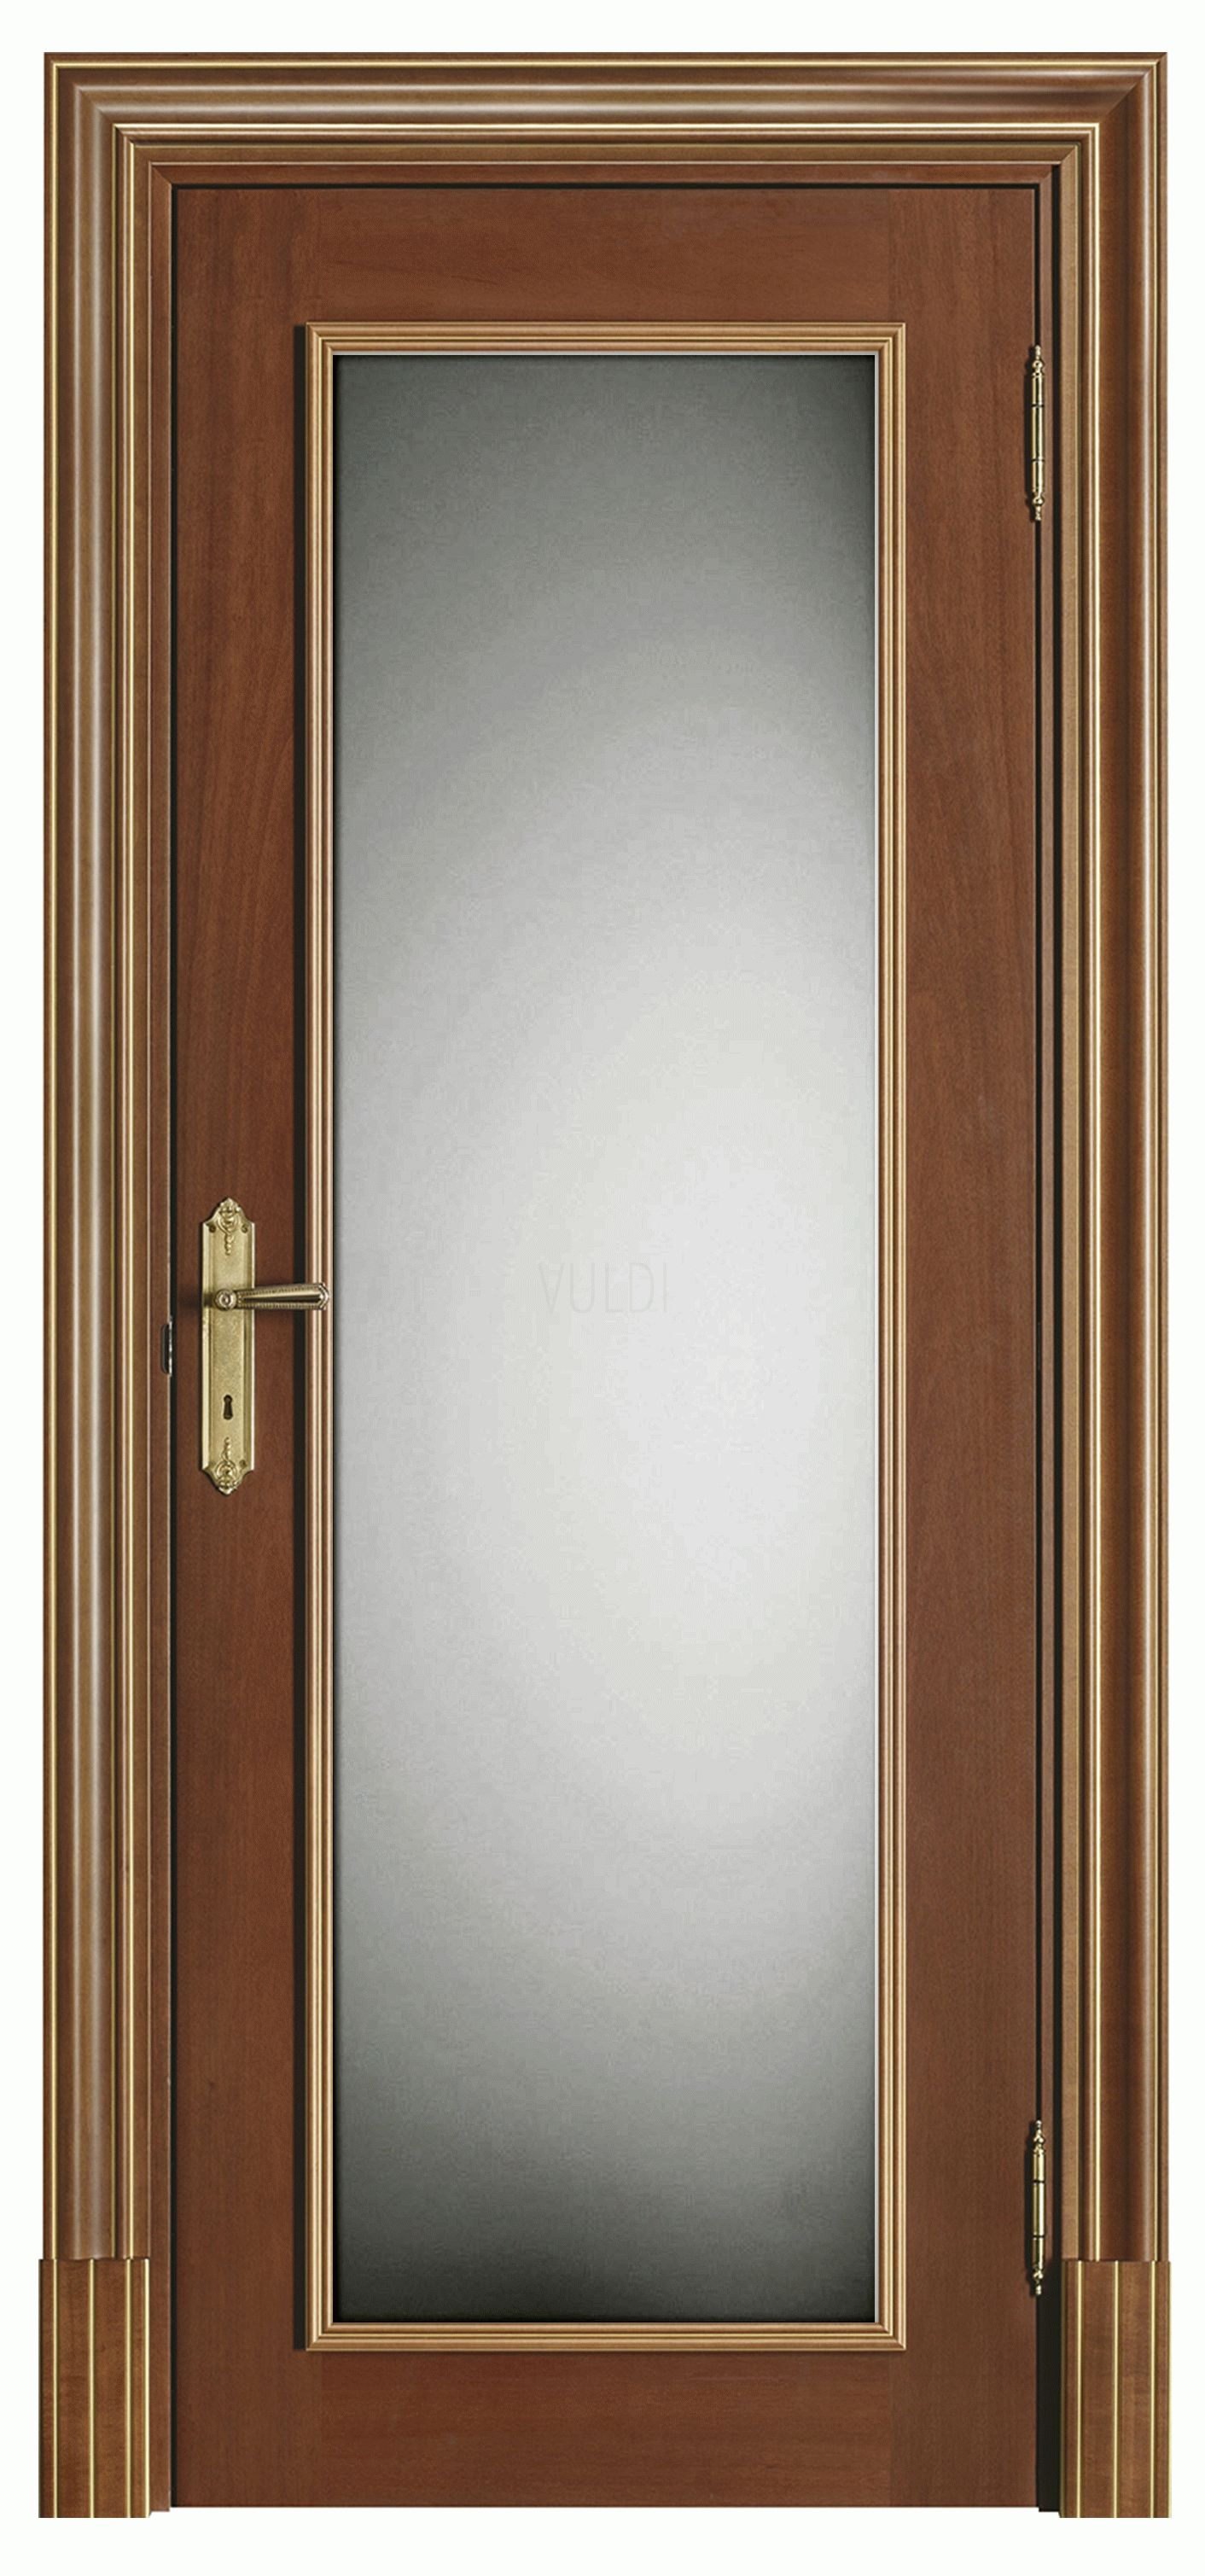  Potenza classico 130 PW Interior Door image from VULDI COMPANY